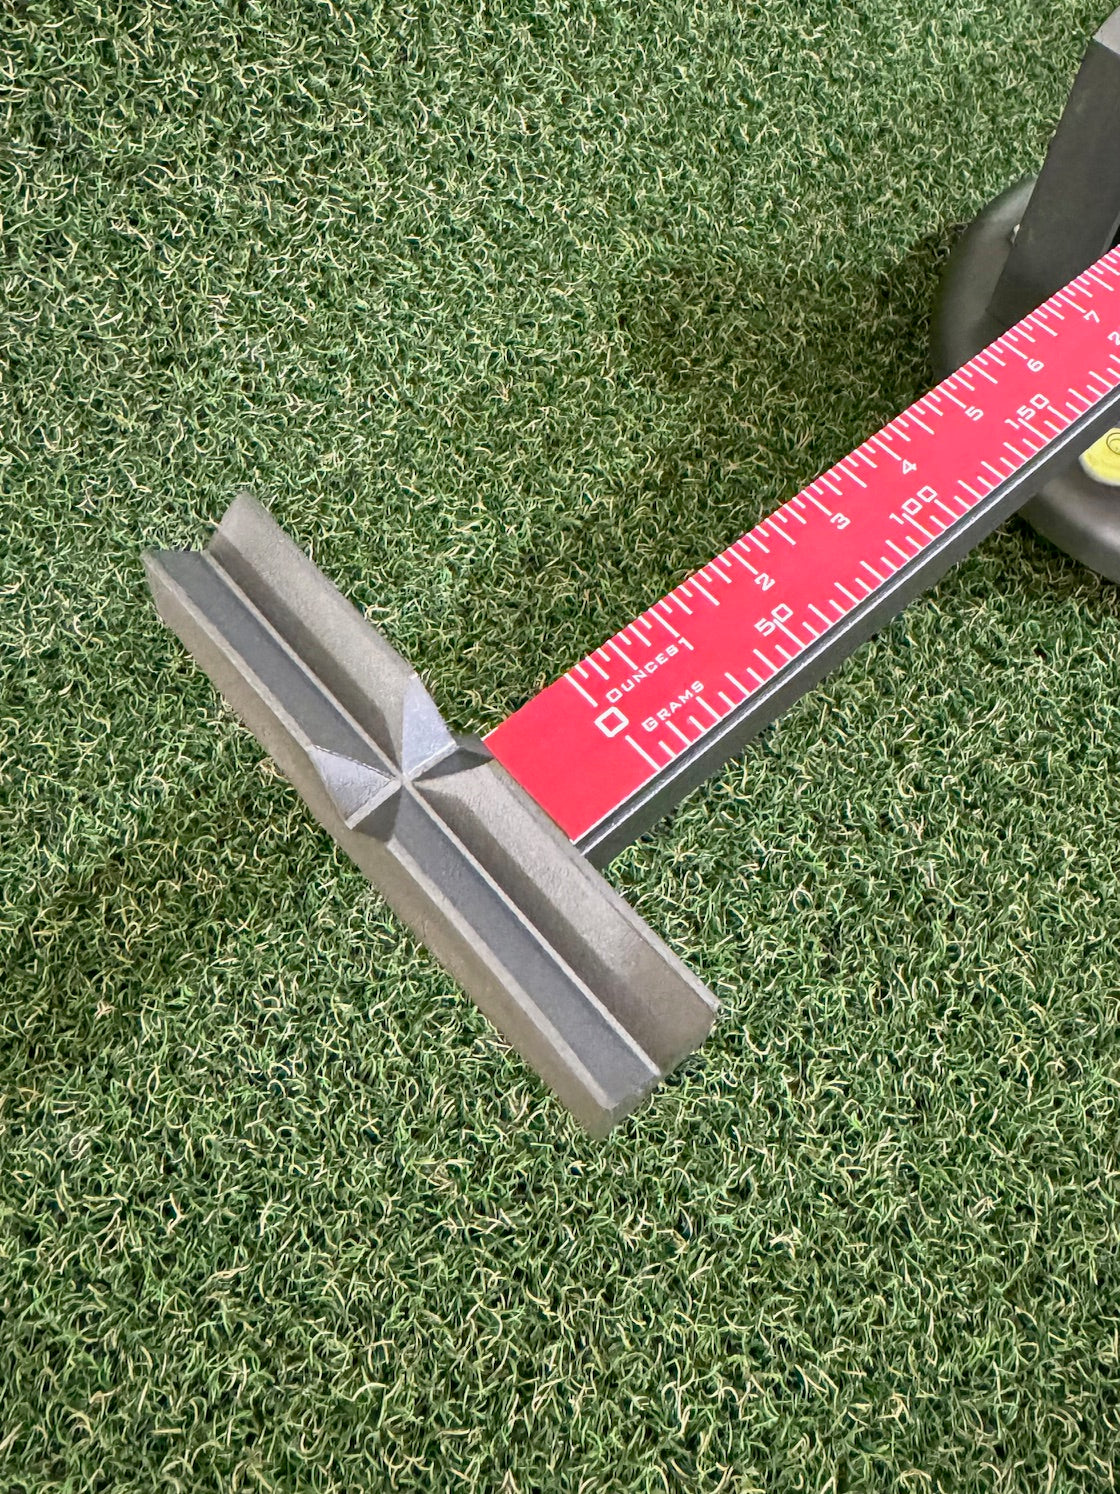 Golf Mechanix Pro-Shop Swing Weight Scale